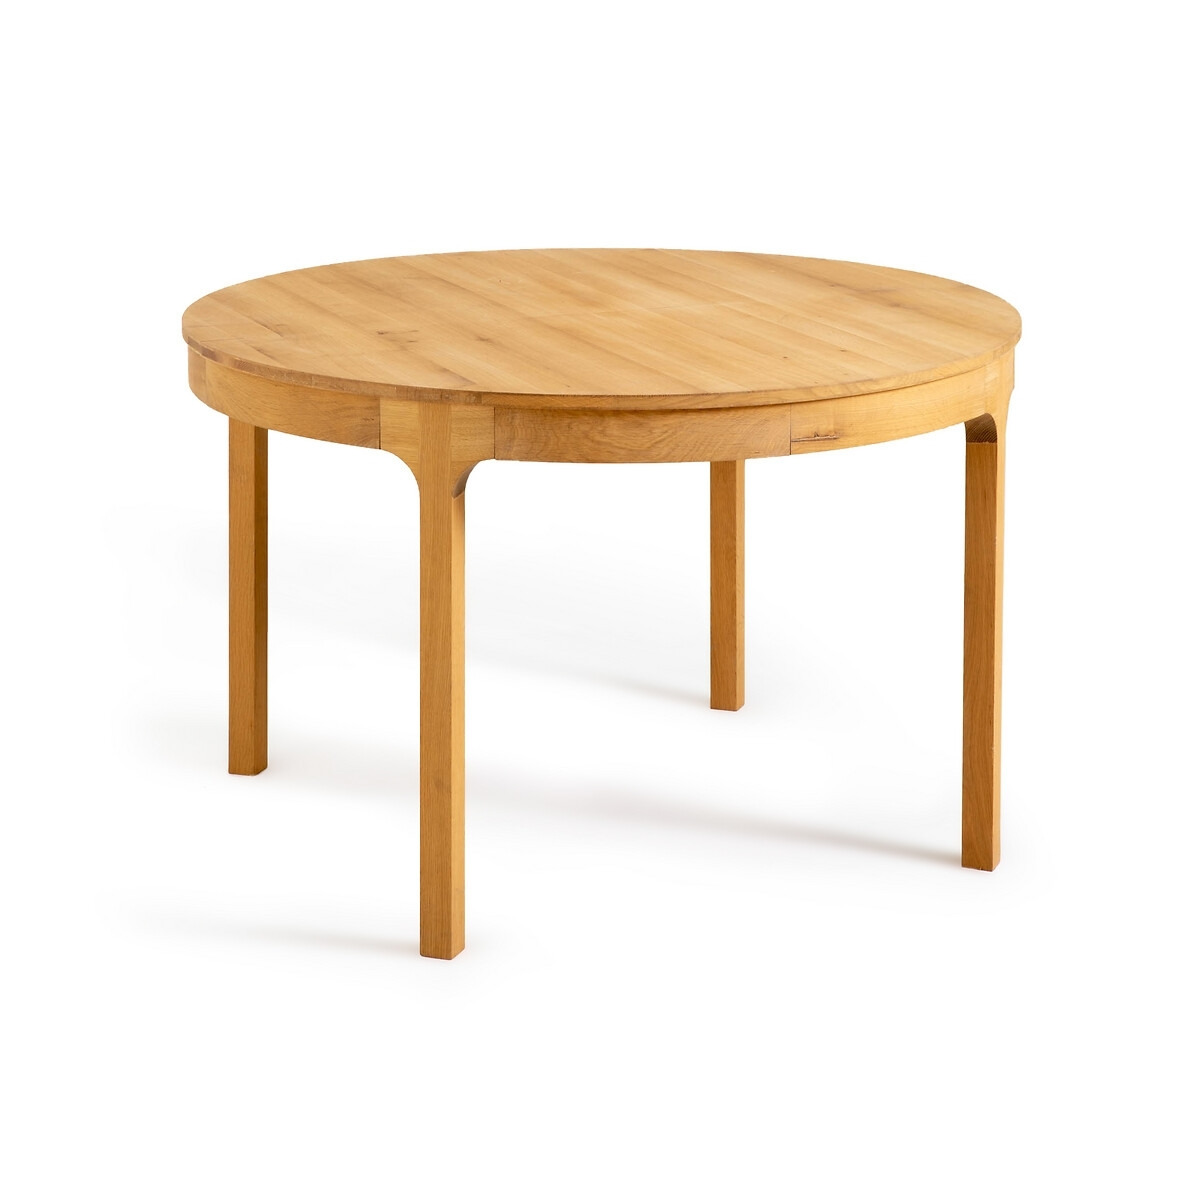 Amalrik 120cm Round Solid Oak Extending Dining Table - image 1